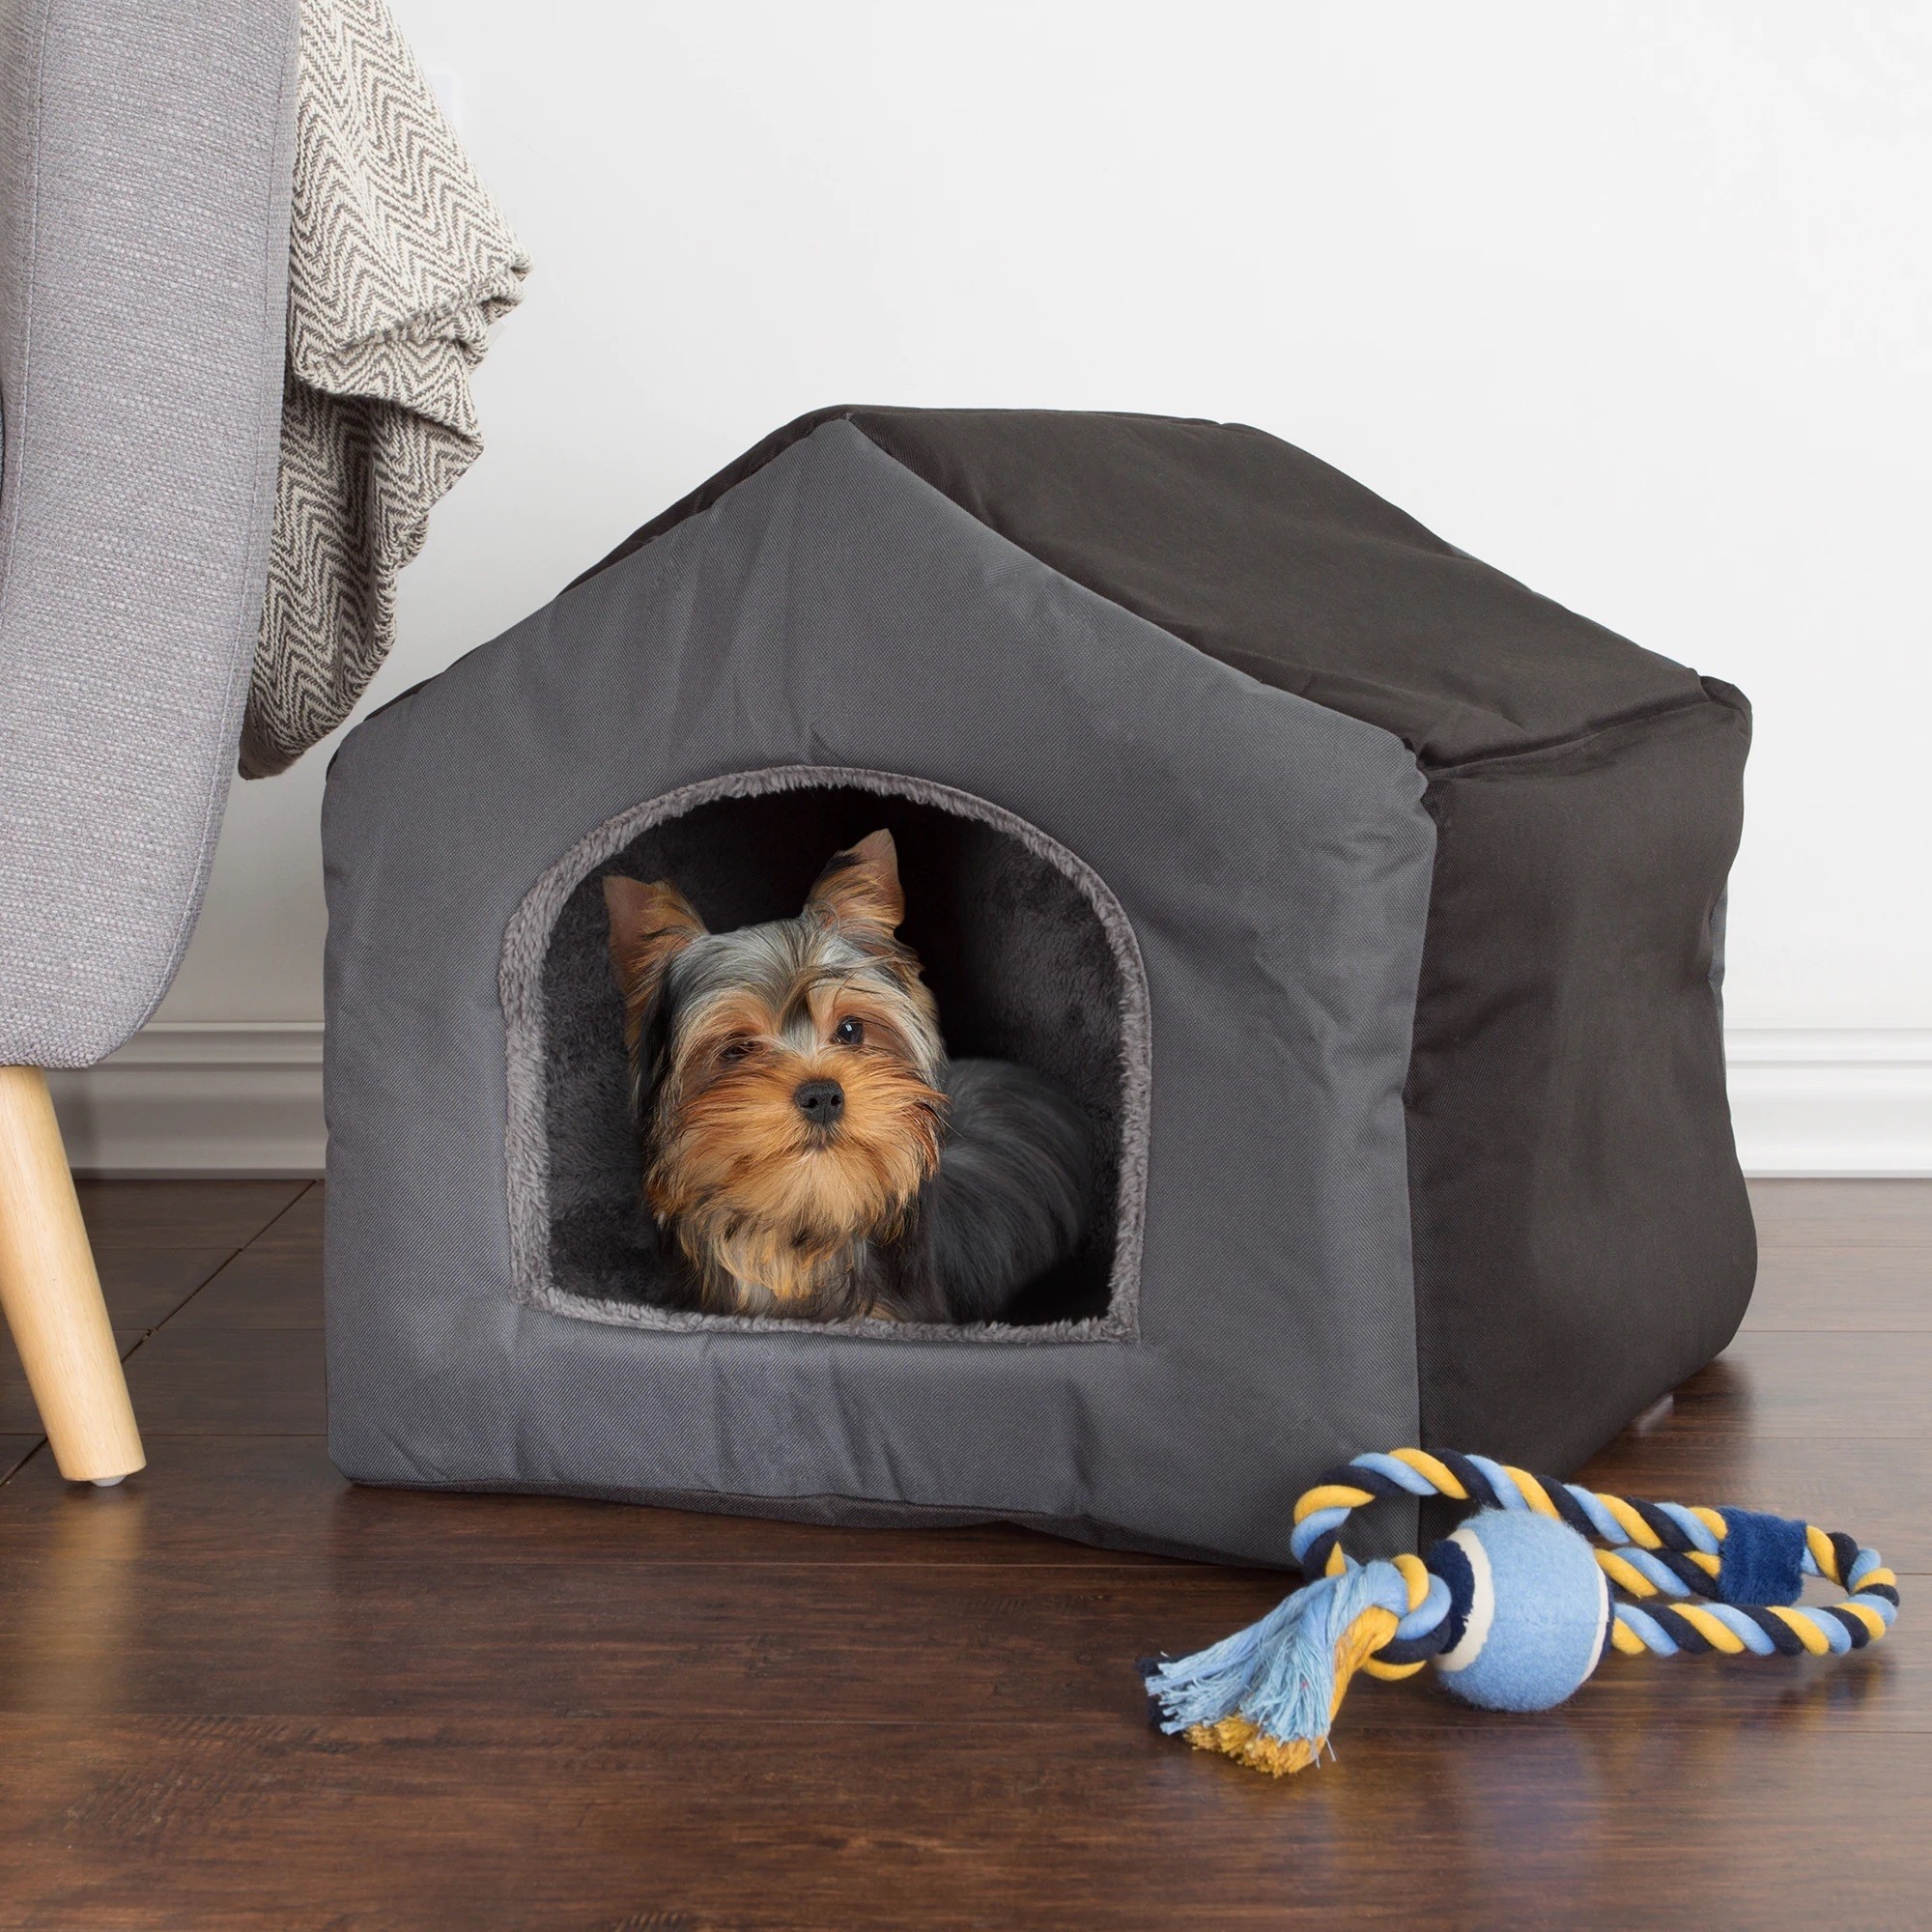 Versatile dog house ideas indoor